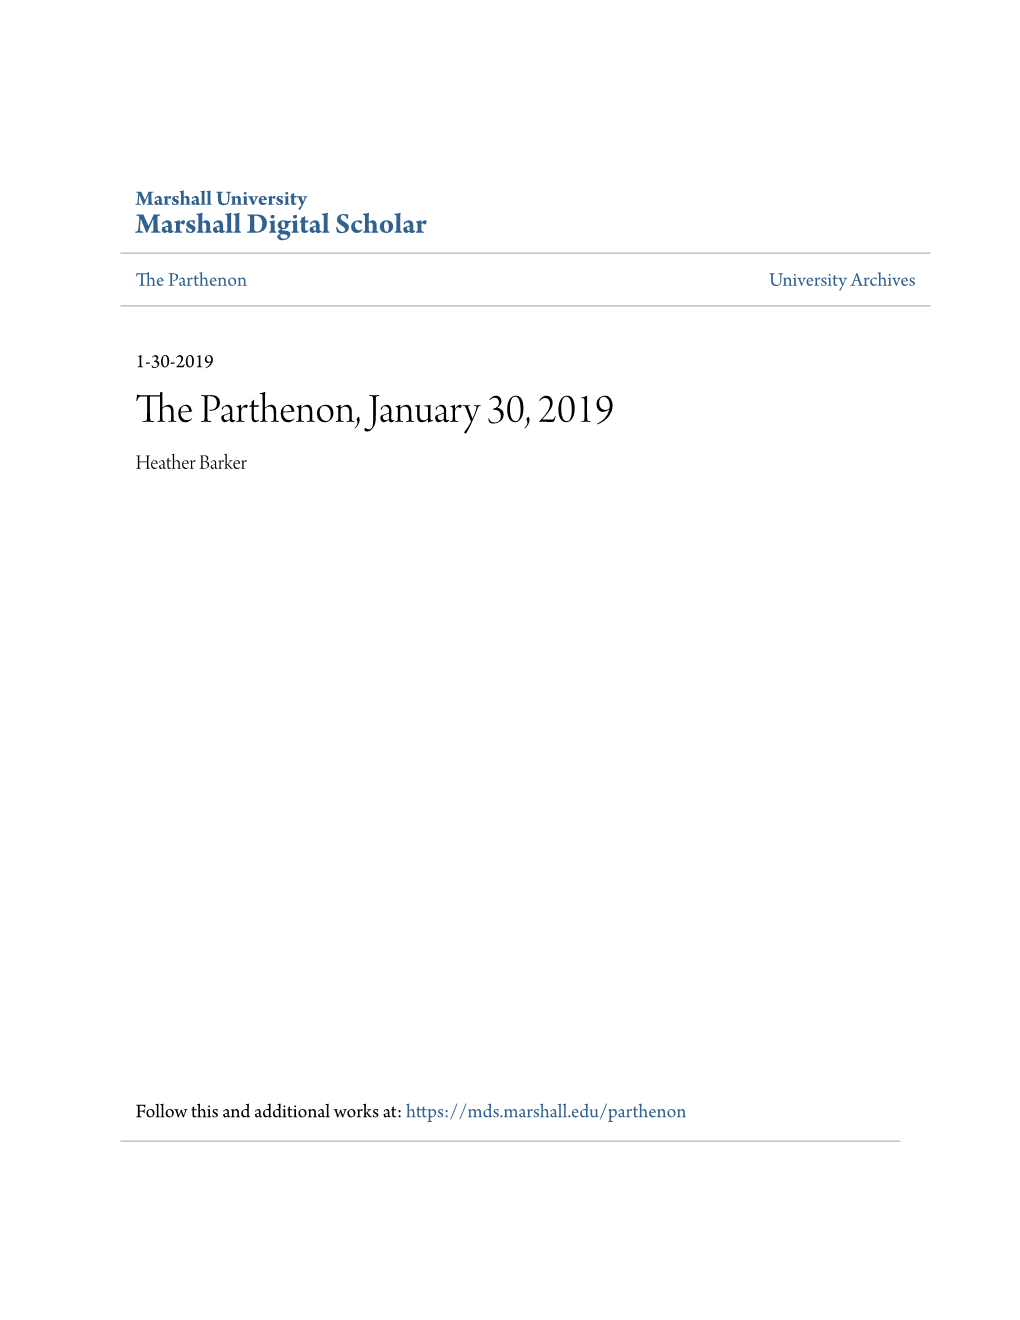 The Parthenon, January 30, 2019